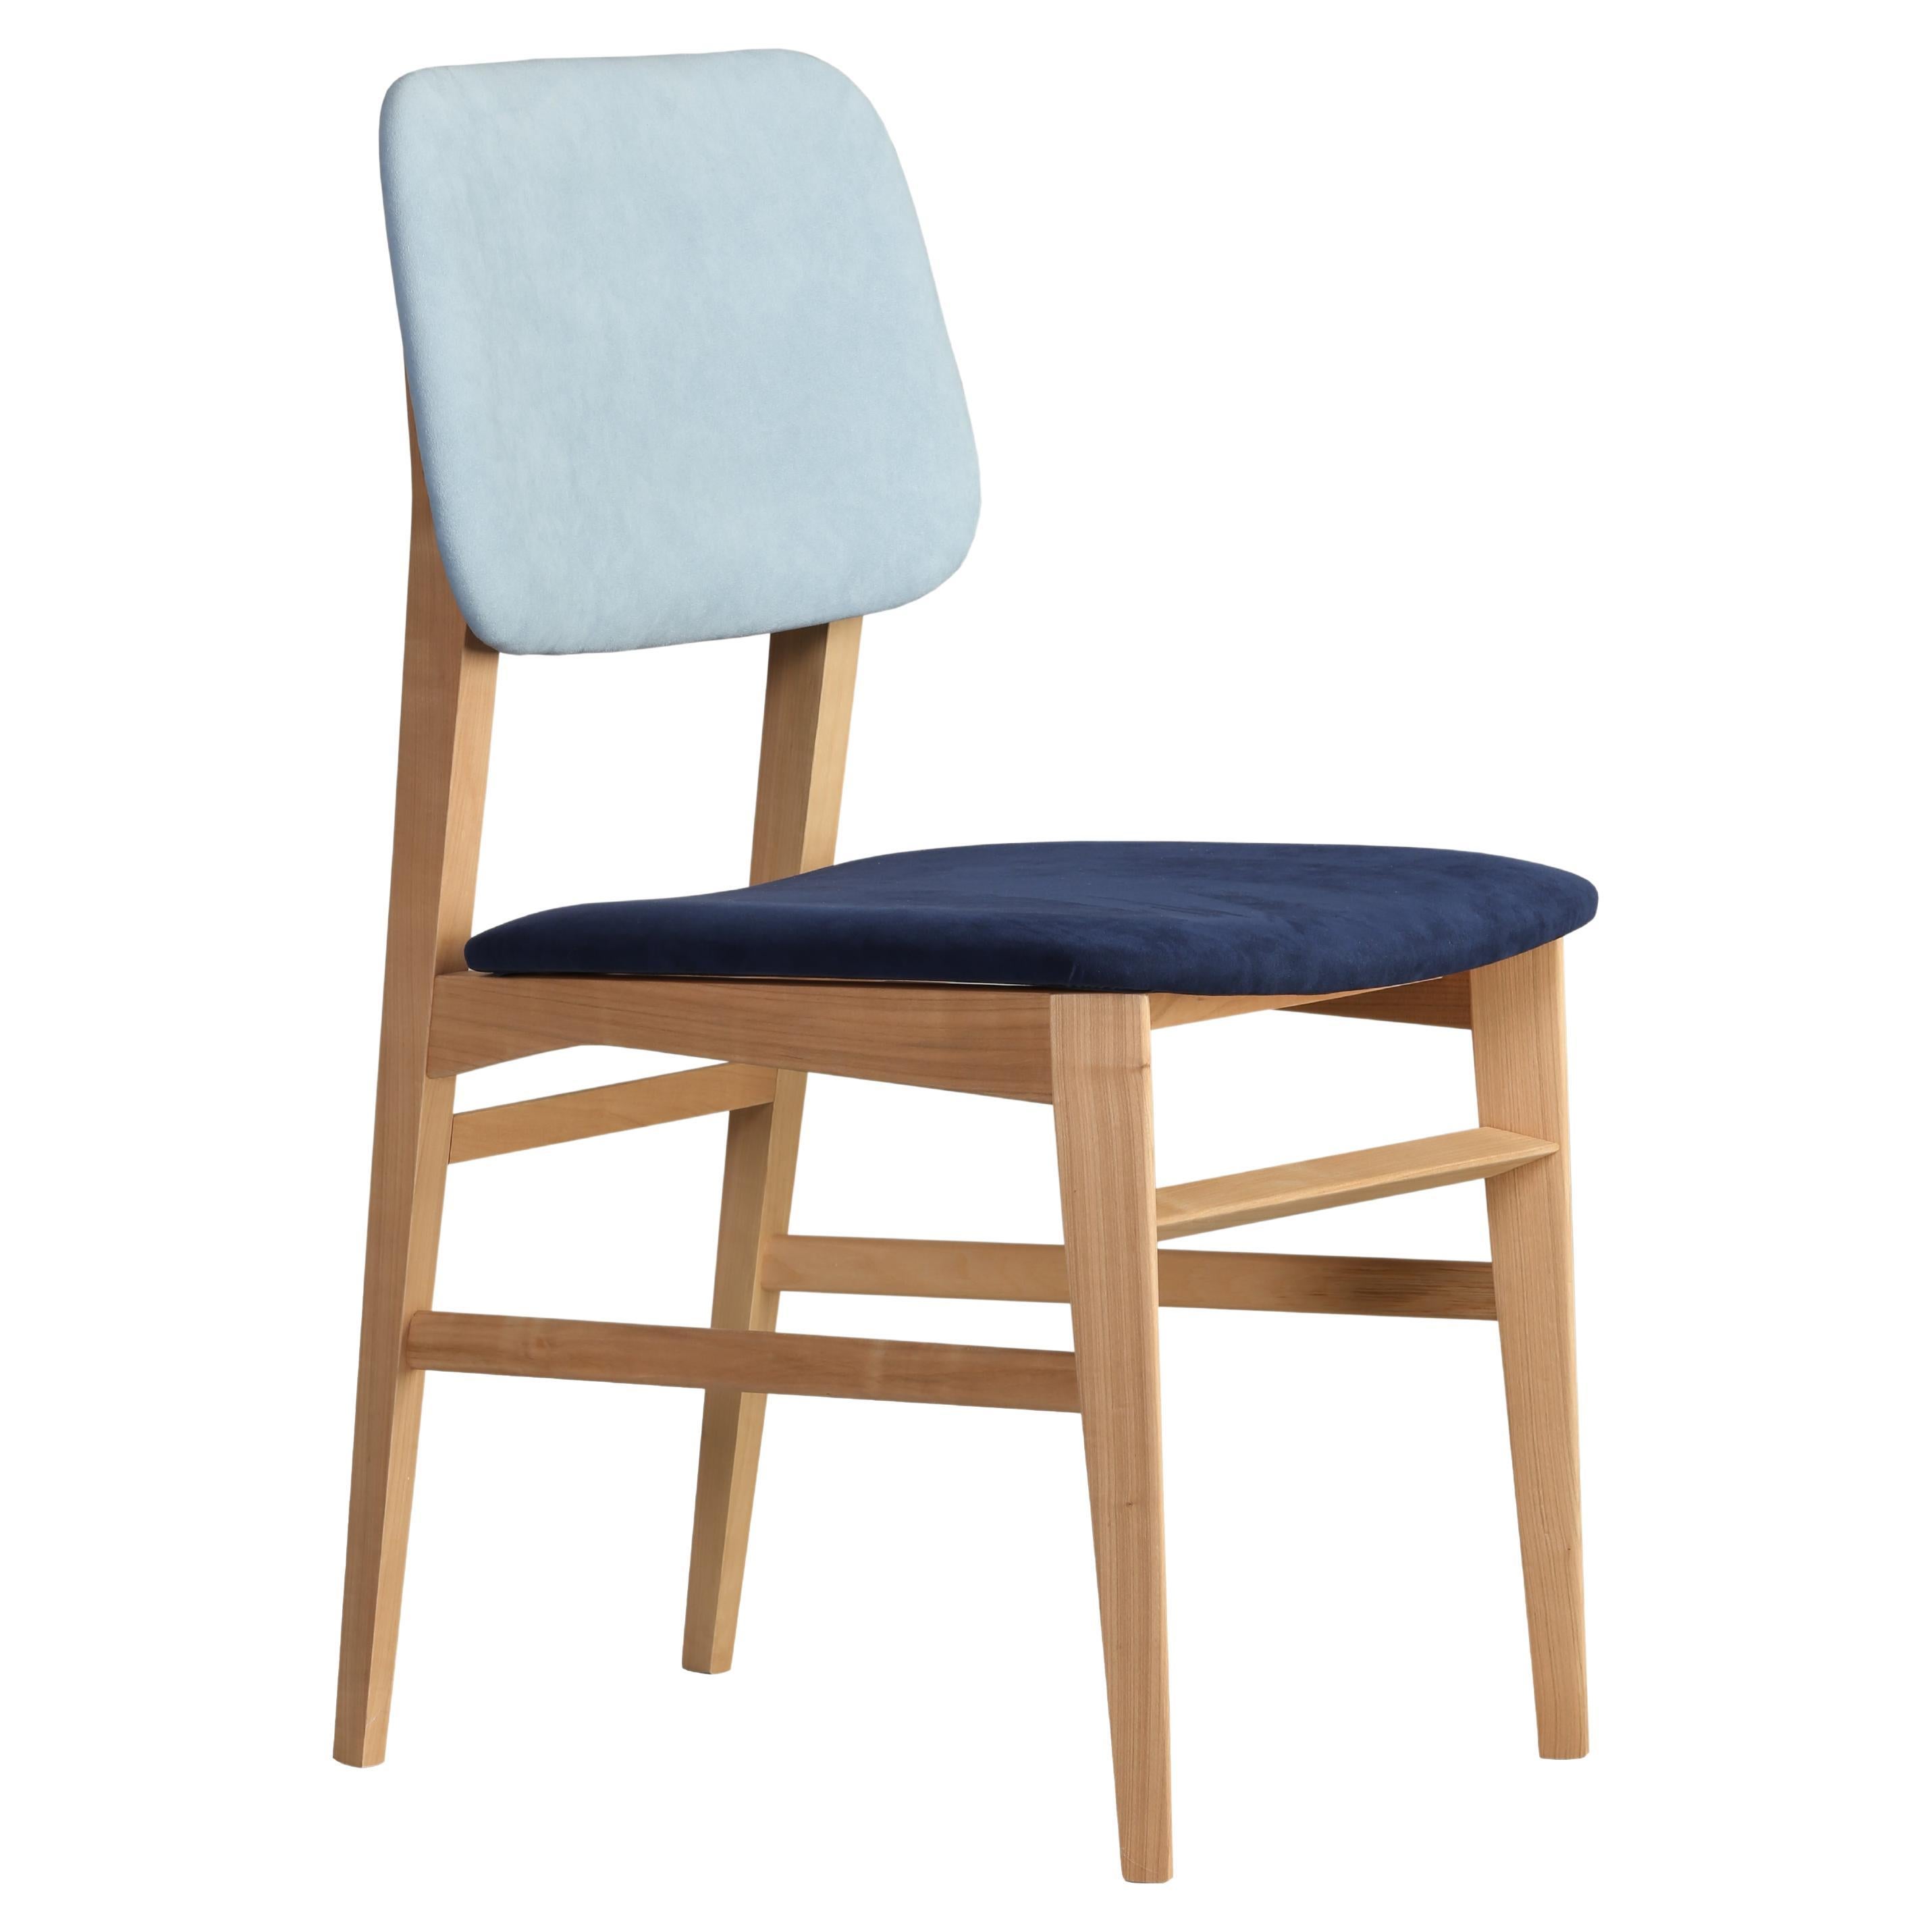 Morelato, Savina Chair in Ash Wood